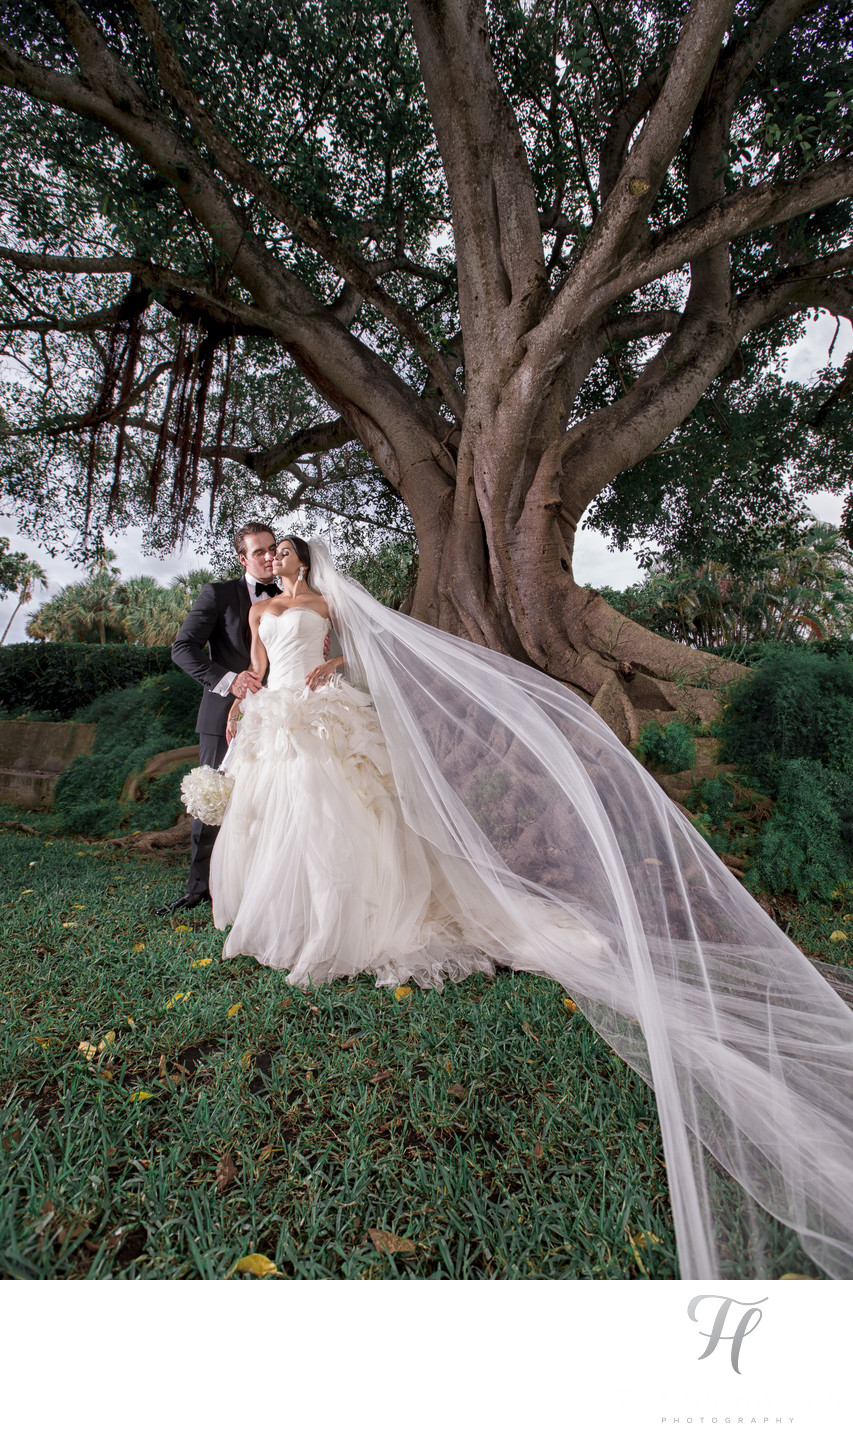 Best Biltmore Wedding Photographers